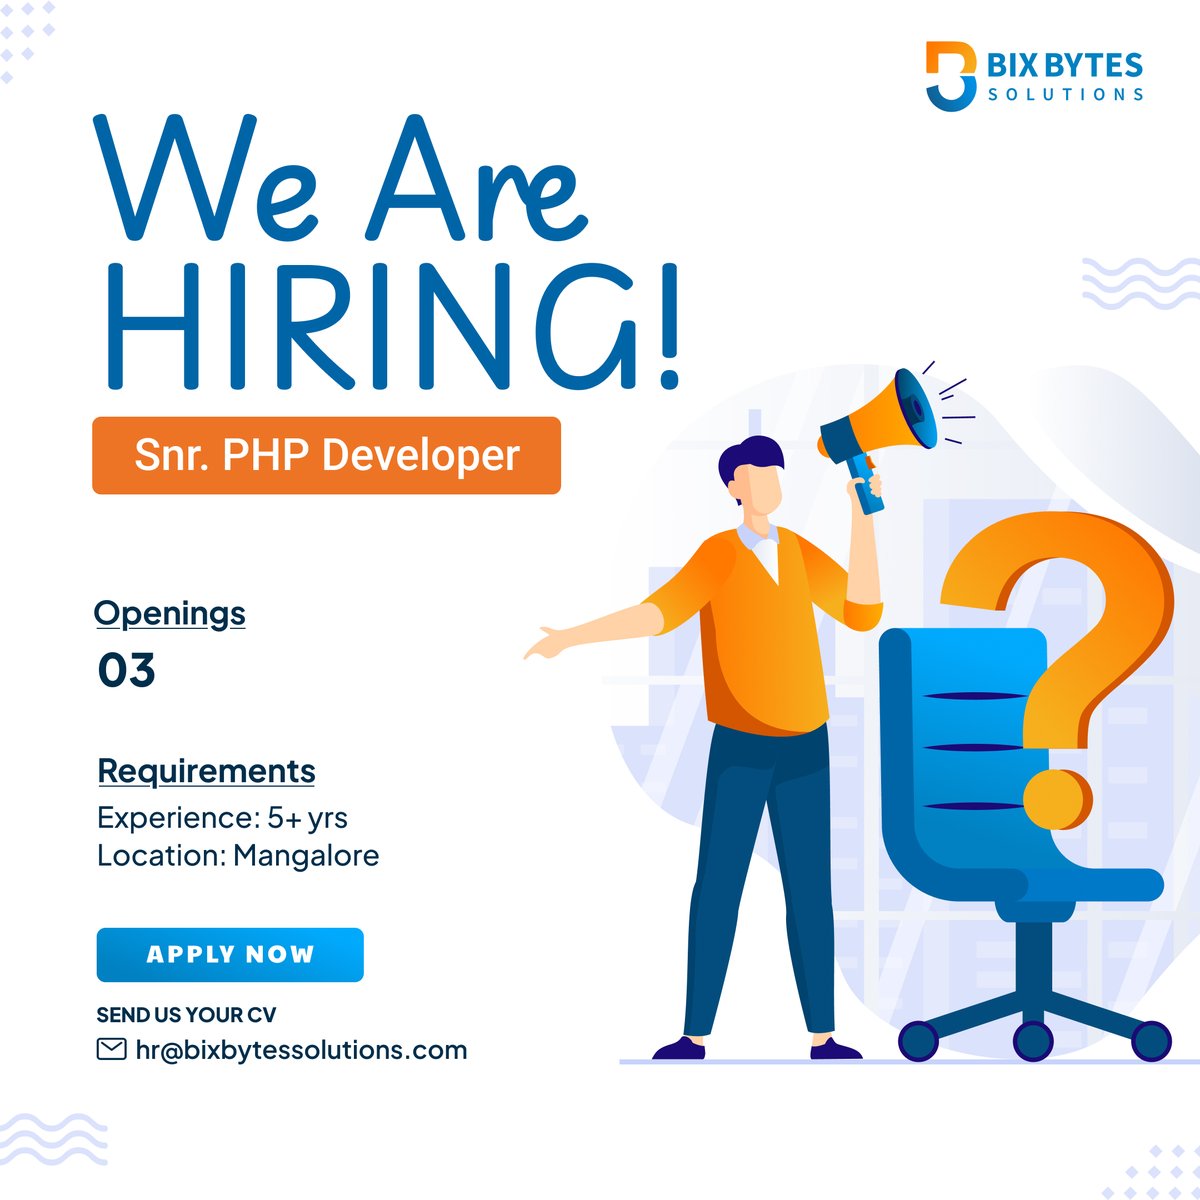 We are Hiring Senior PHP Developers! 👨‍💻

📝 Apply Now!
✉️ Send your CV to hr@bixbytessolutions.com
🌐 Visit - bixbytessolutions.com/en/jobs

#SoftwareDeveloper #phpdeveloper #jobopening   #Jobs #HIRINGNOW #JobOpportunity #Career 
#Mangalore #mangaluru #bixbytessolutions